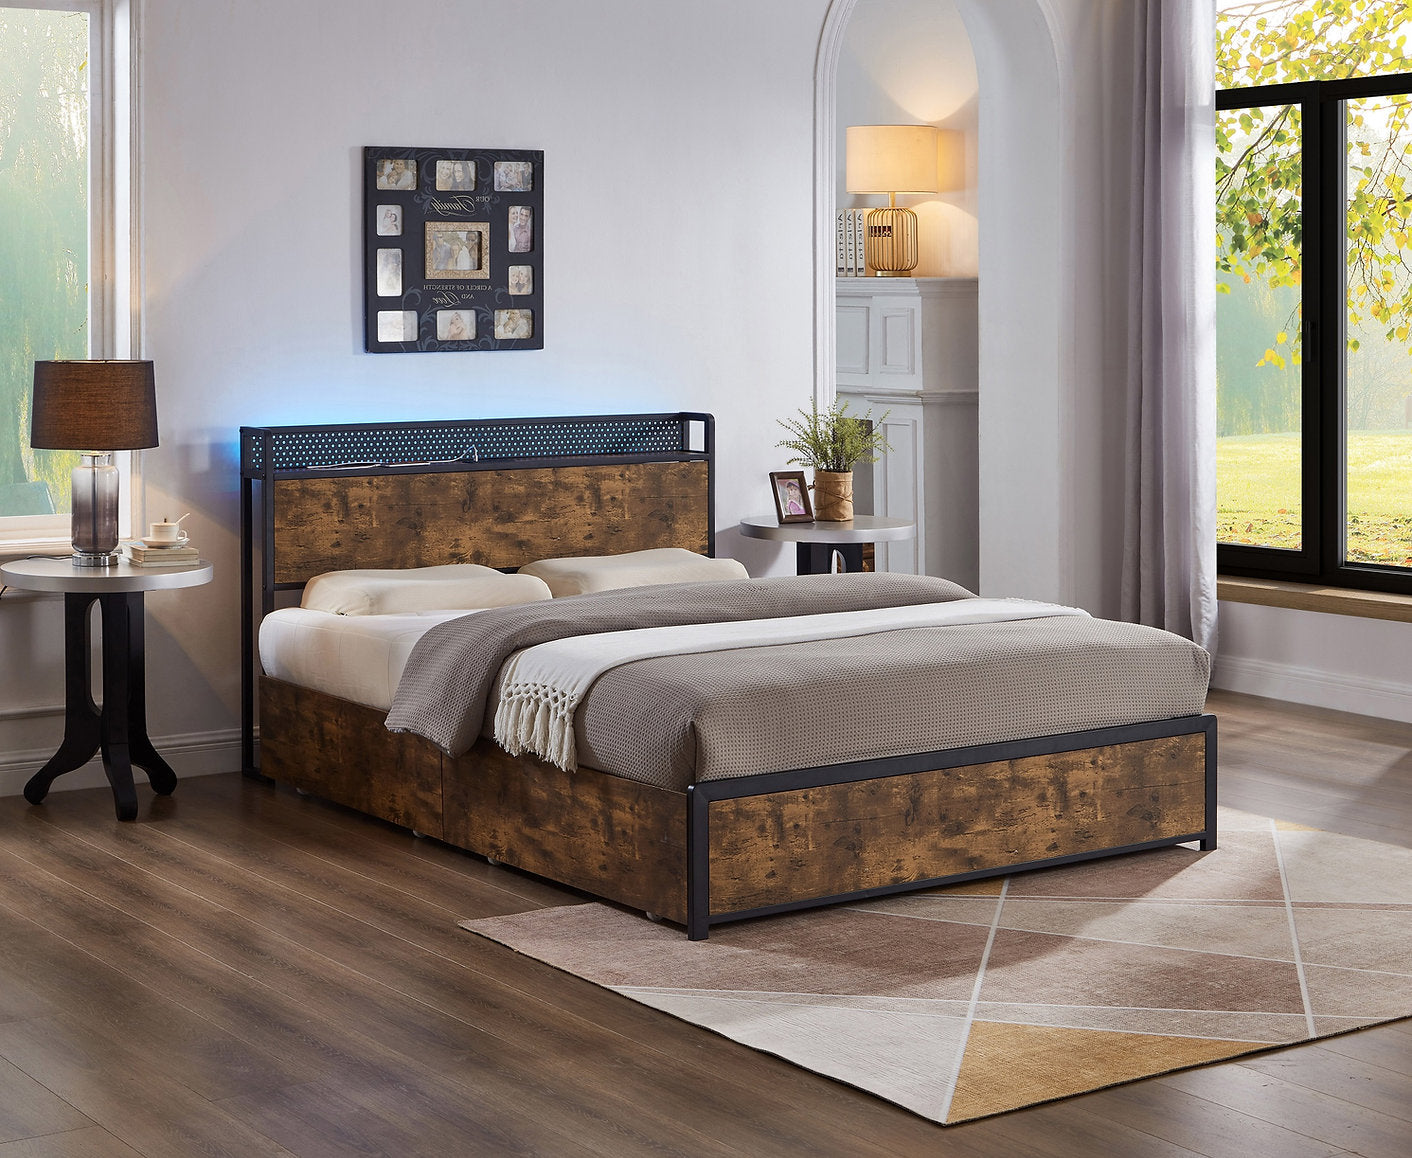 IF-5930 Bed, Wood Grain Panels and Metal Frame, LED Lights, USB Charging Ports